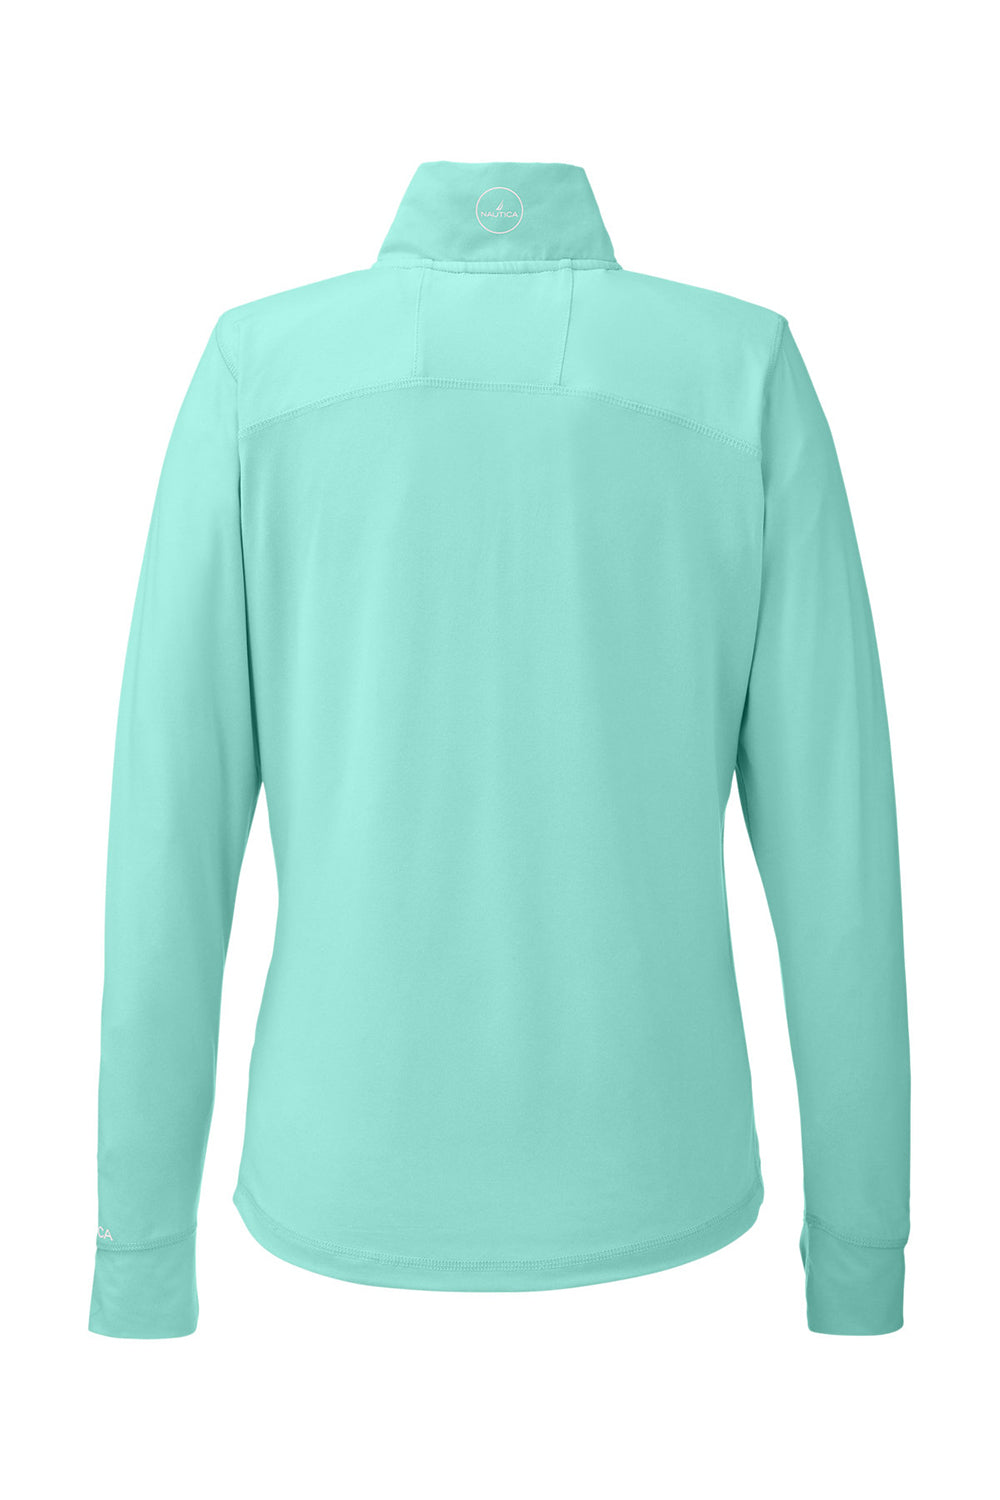 Nautica N17925 Womens Saltwater 1/4 Zip Sweatshirt Cool Mint Green Flat Back